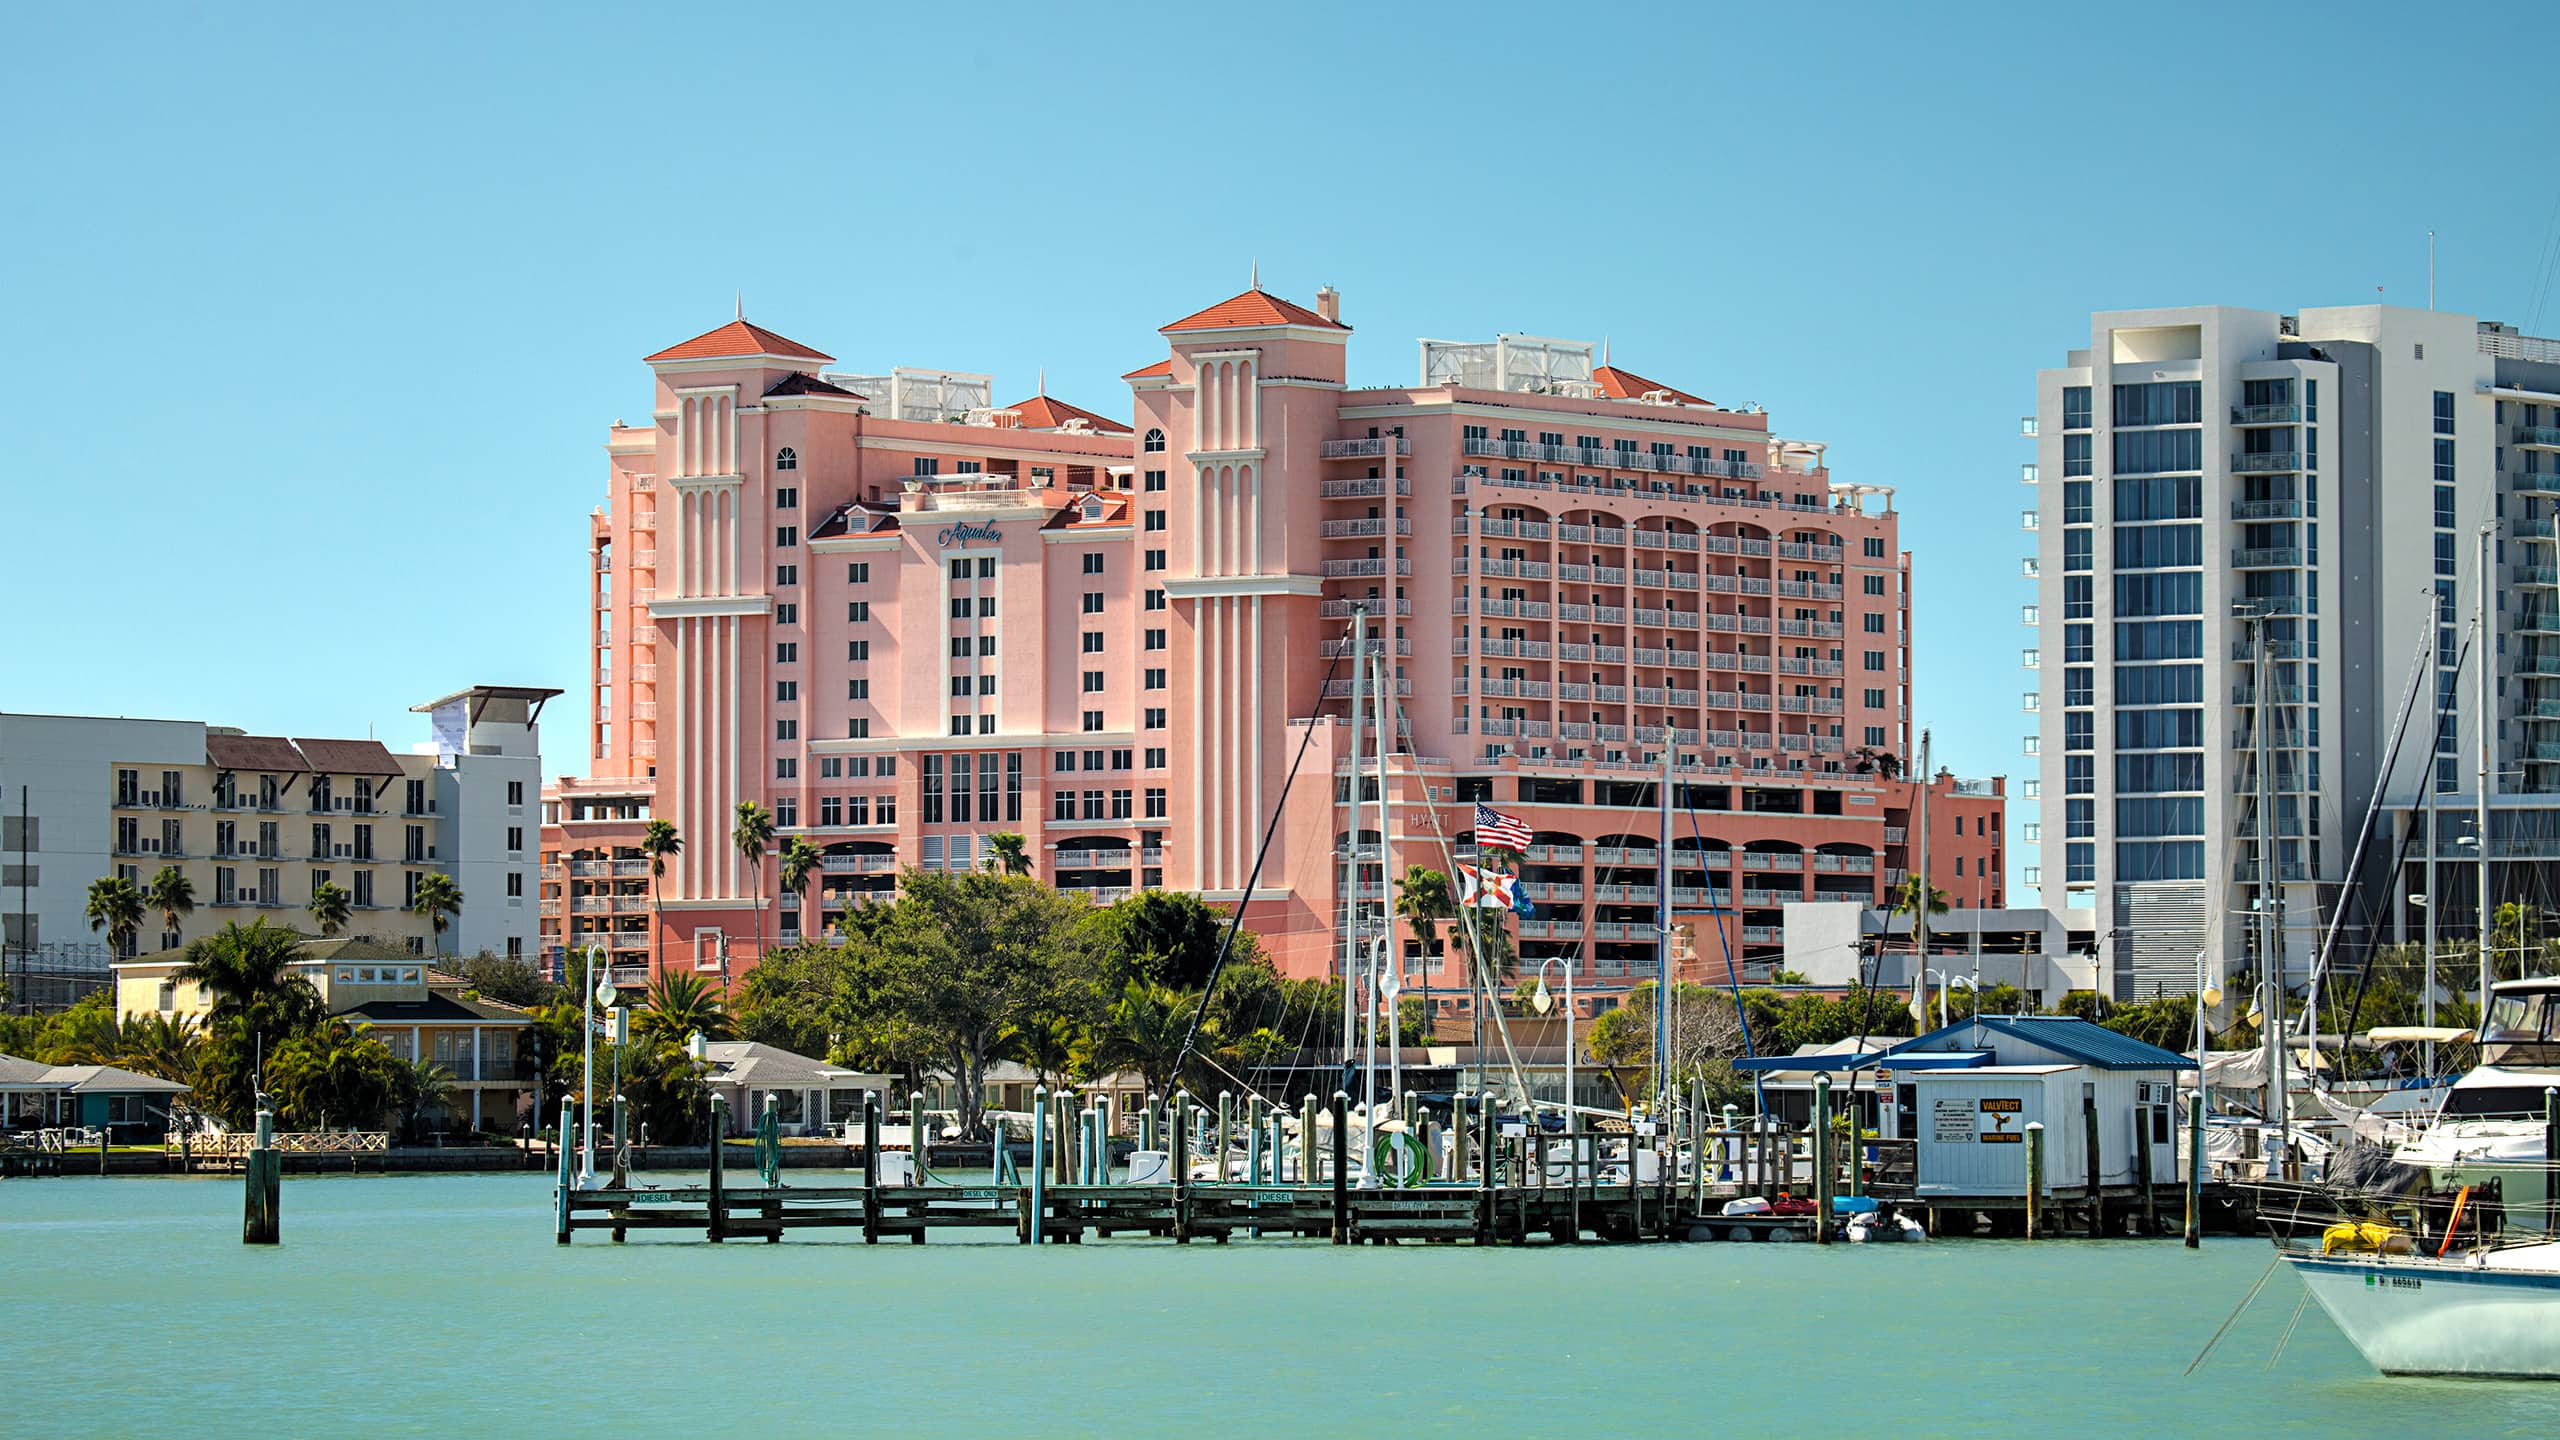 Hyatt Regency Clearwater Beach Resort and Spa Exterior Marina